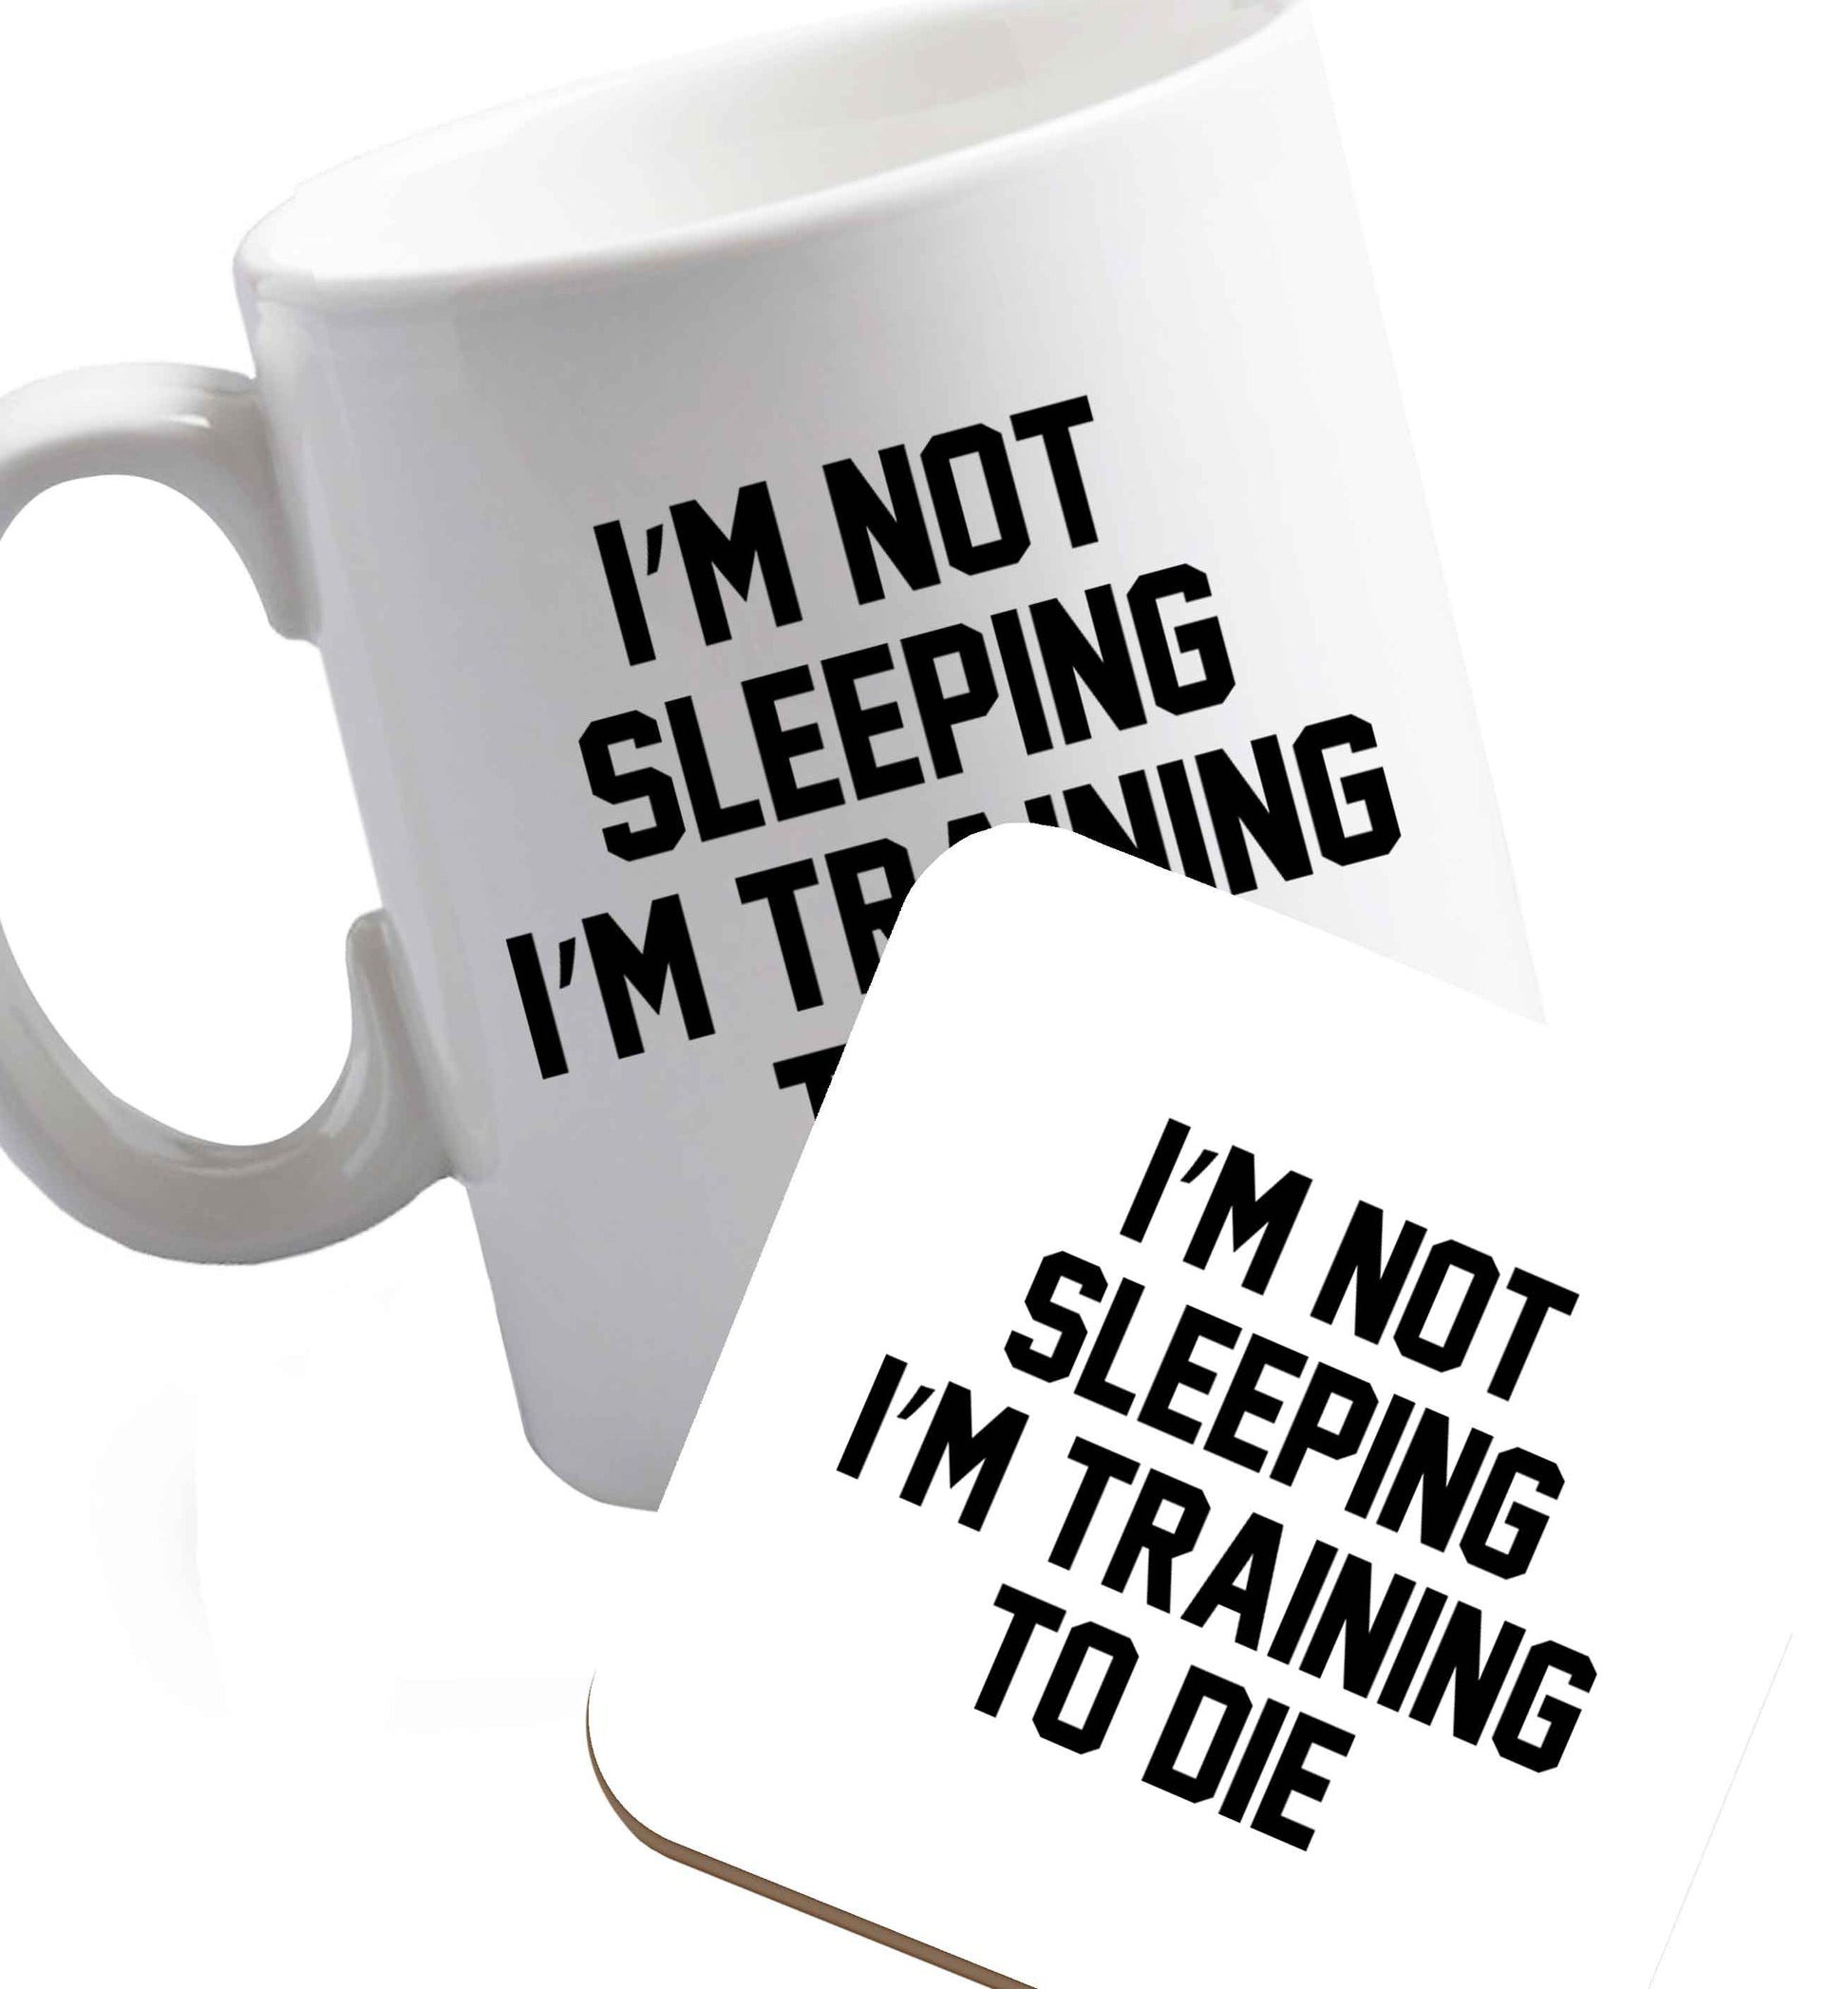 10 oz I'm not sleeping I'm training to die ceramic mug and coaster set right handed